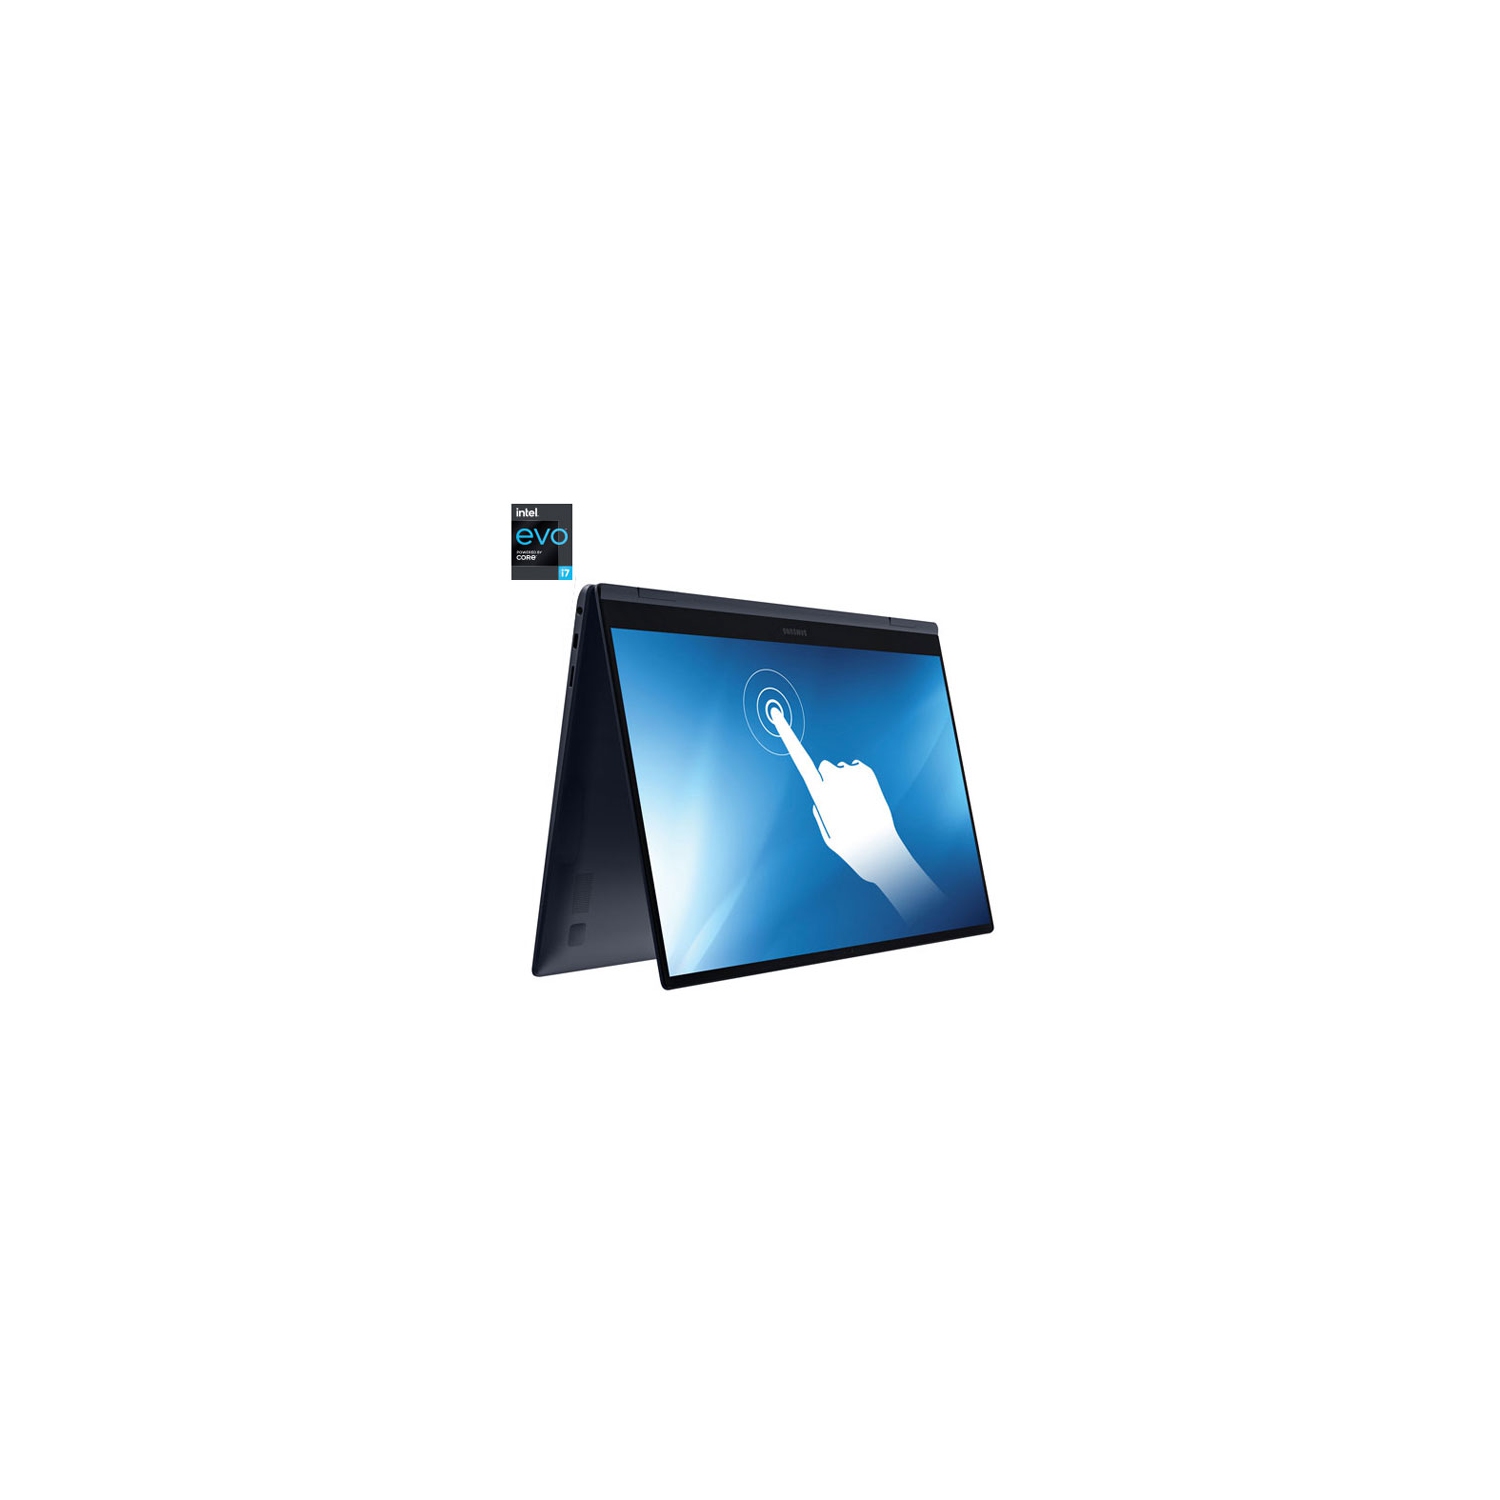 Refurbished (Fair) - Samsung Galaxy Book Pro 360 15.6" Touchscreen 2-in-1 Laptop (Intel Evo i7-1165G7/512GB SSD/16GB RAM/Win 11)